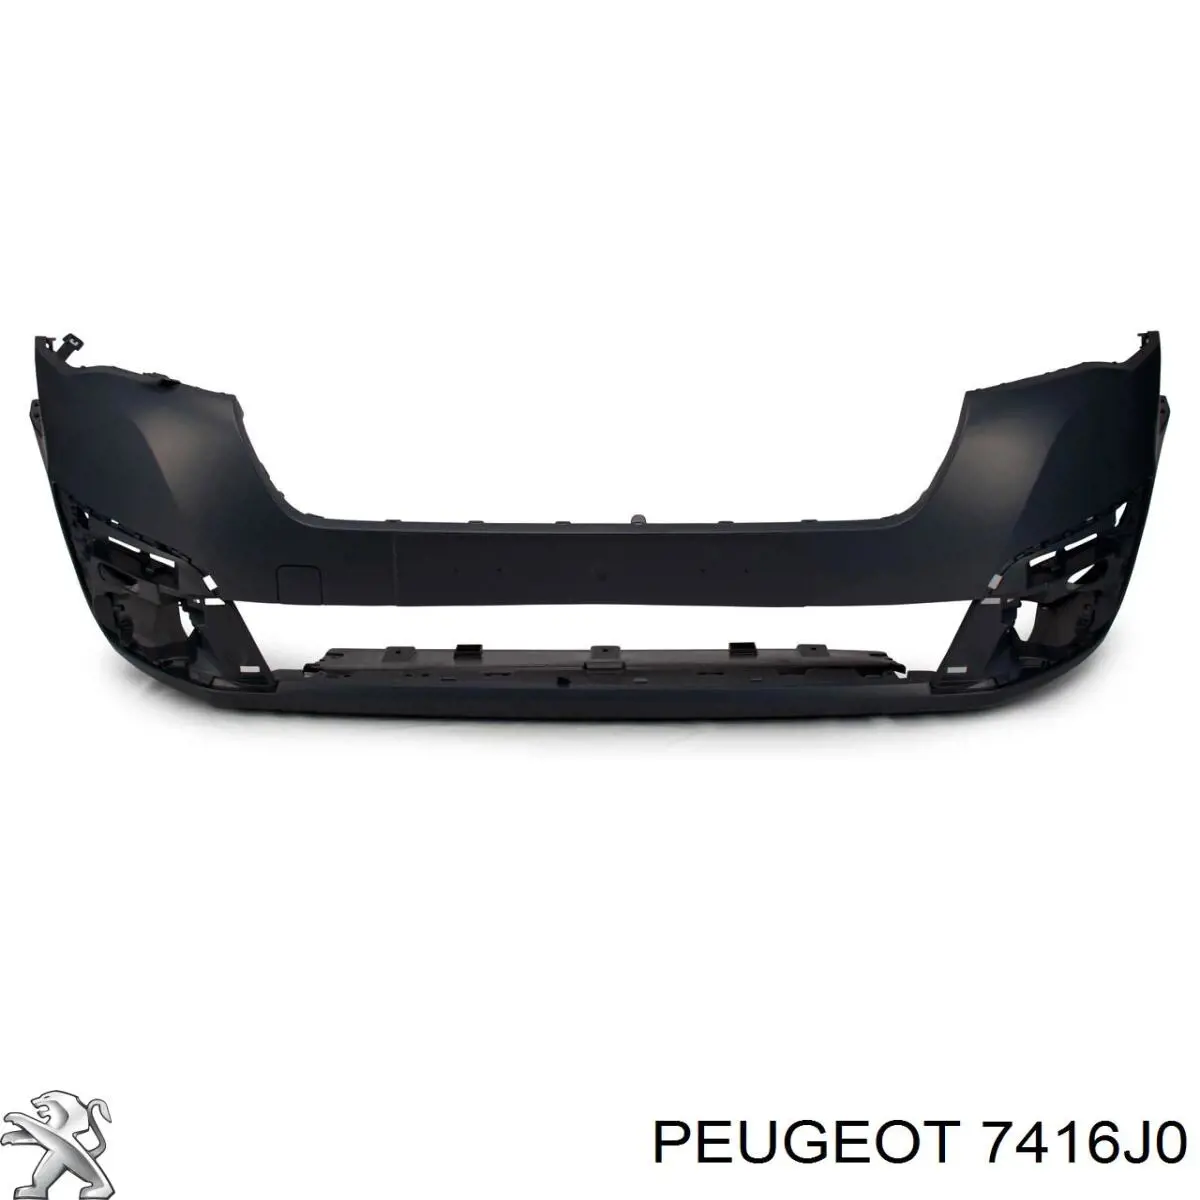 00007416J0 Peugeot/Citroen soporte de parachoques trasero